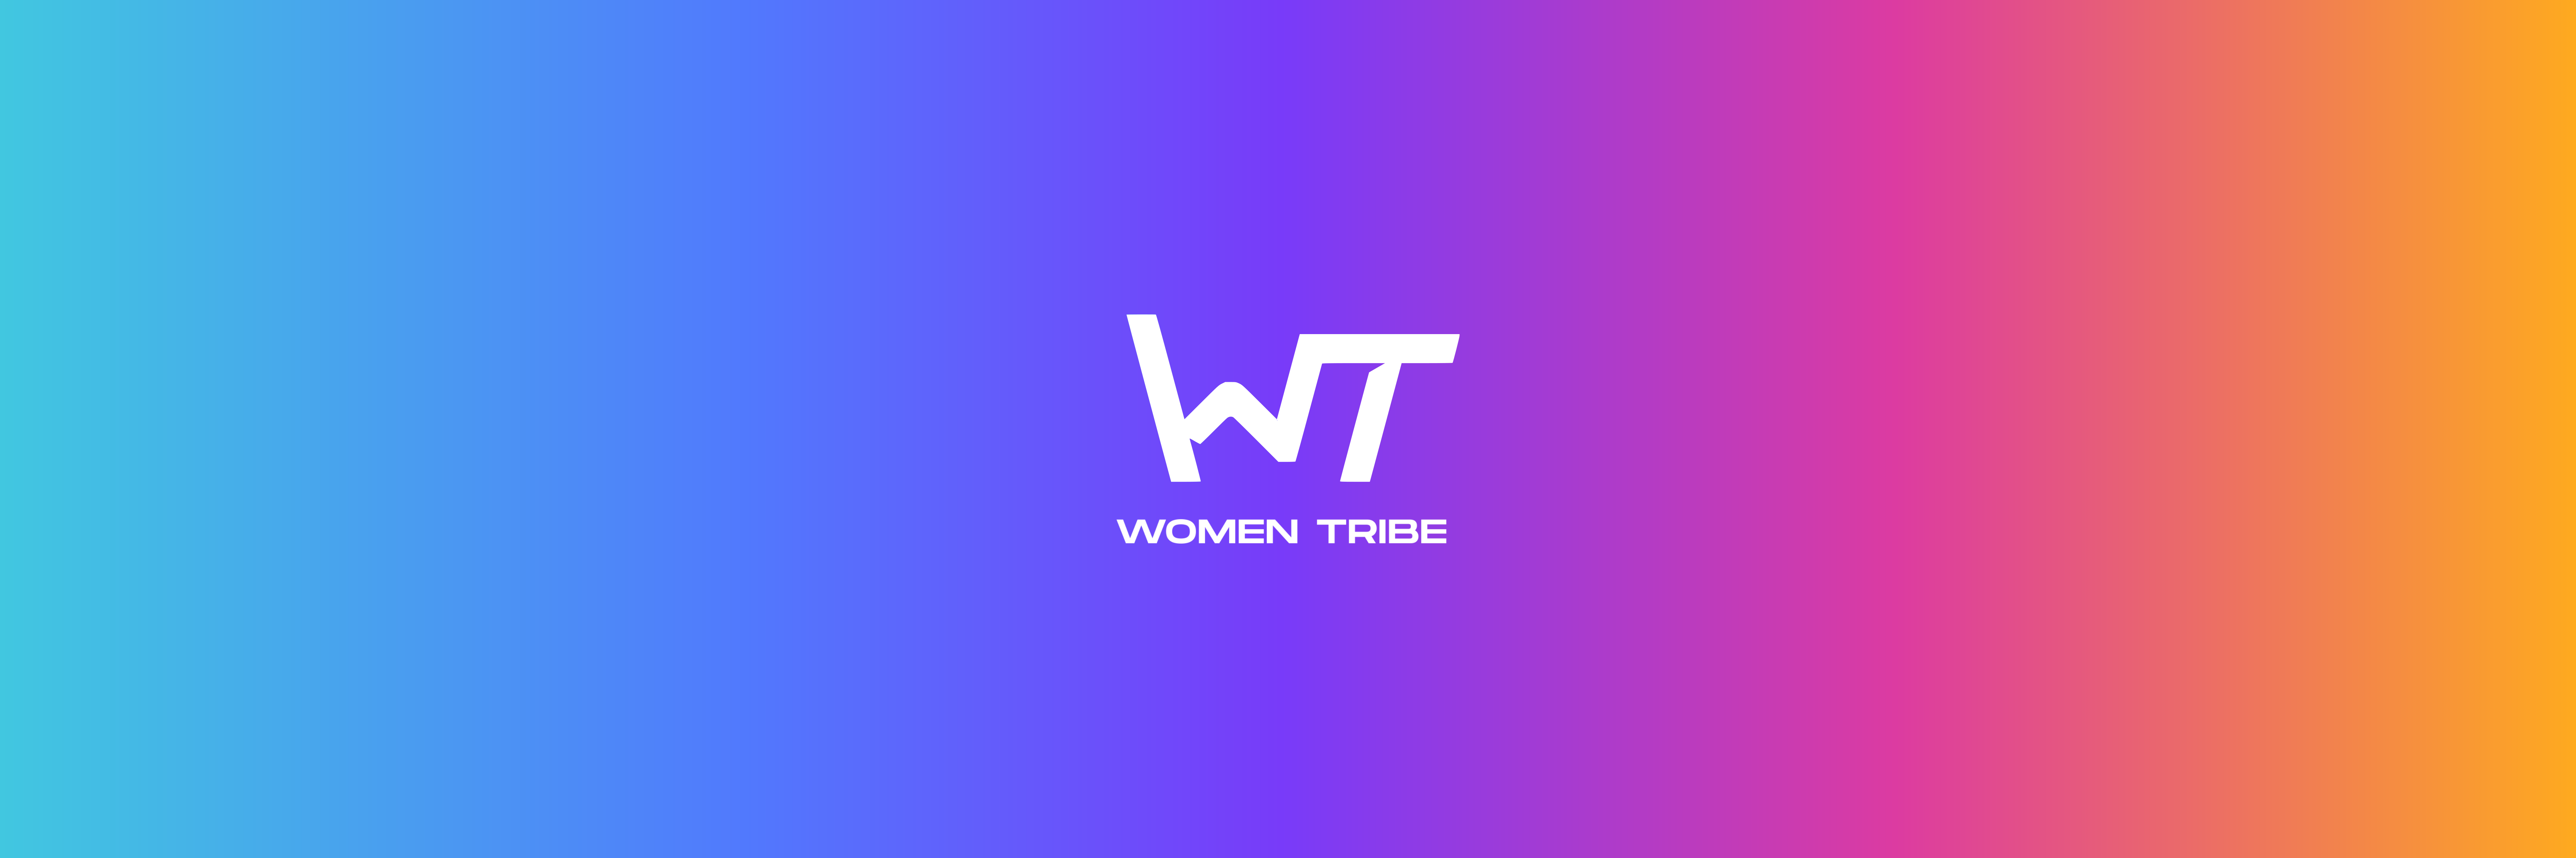 WomenTribe_Vault banner